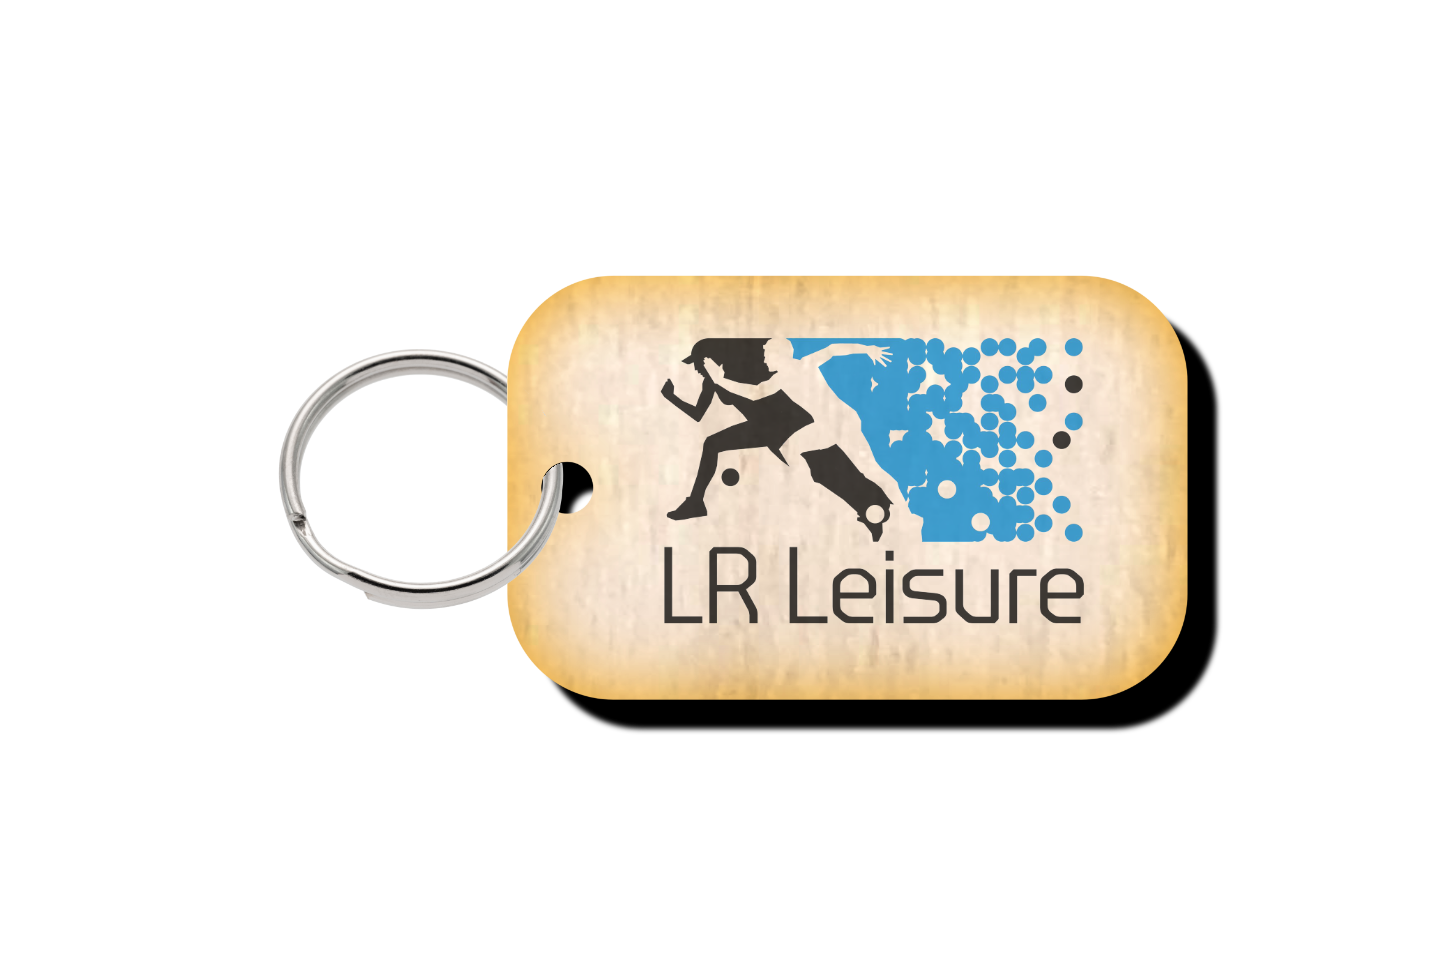 LR Leisure wooden key ring